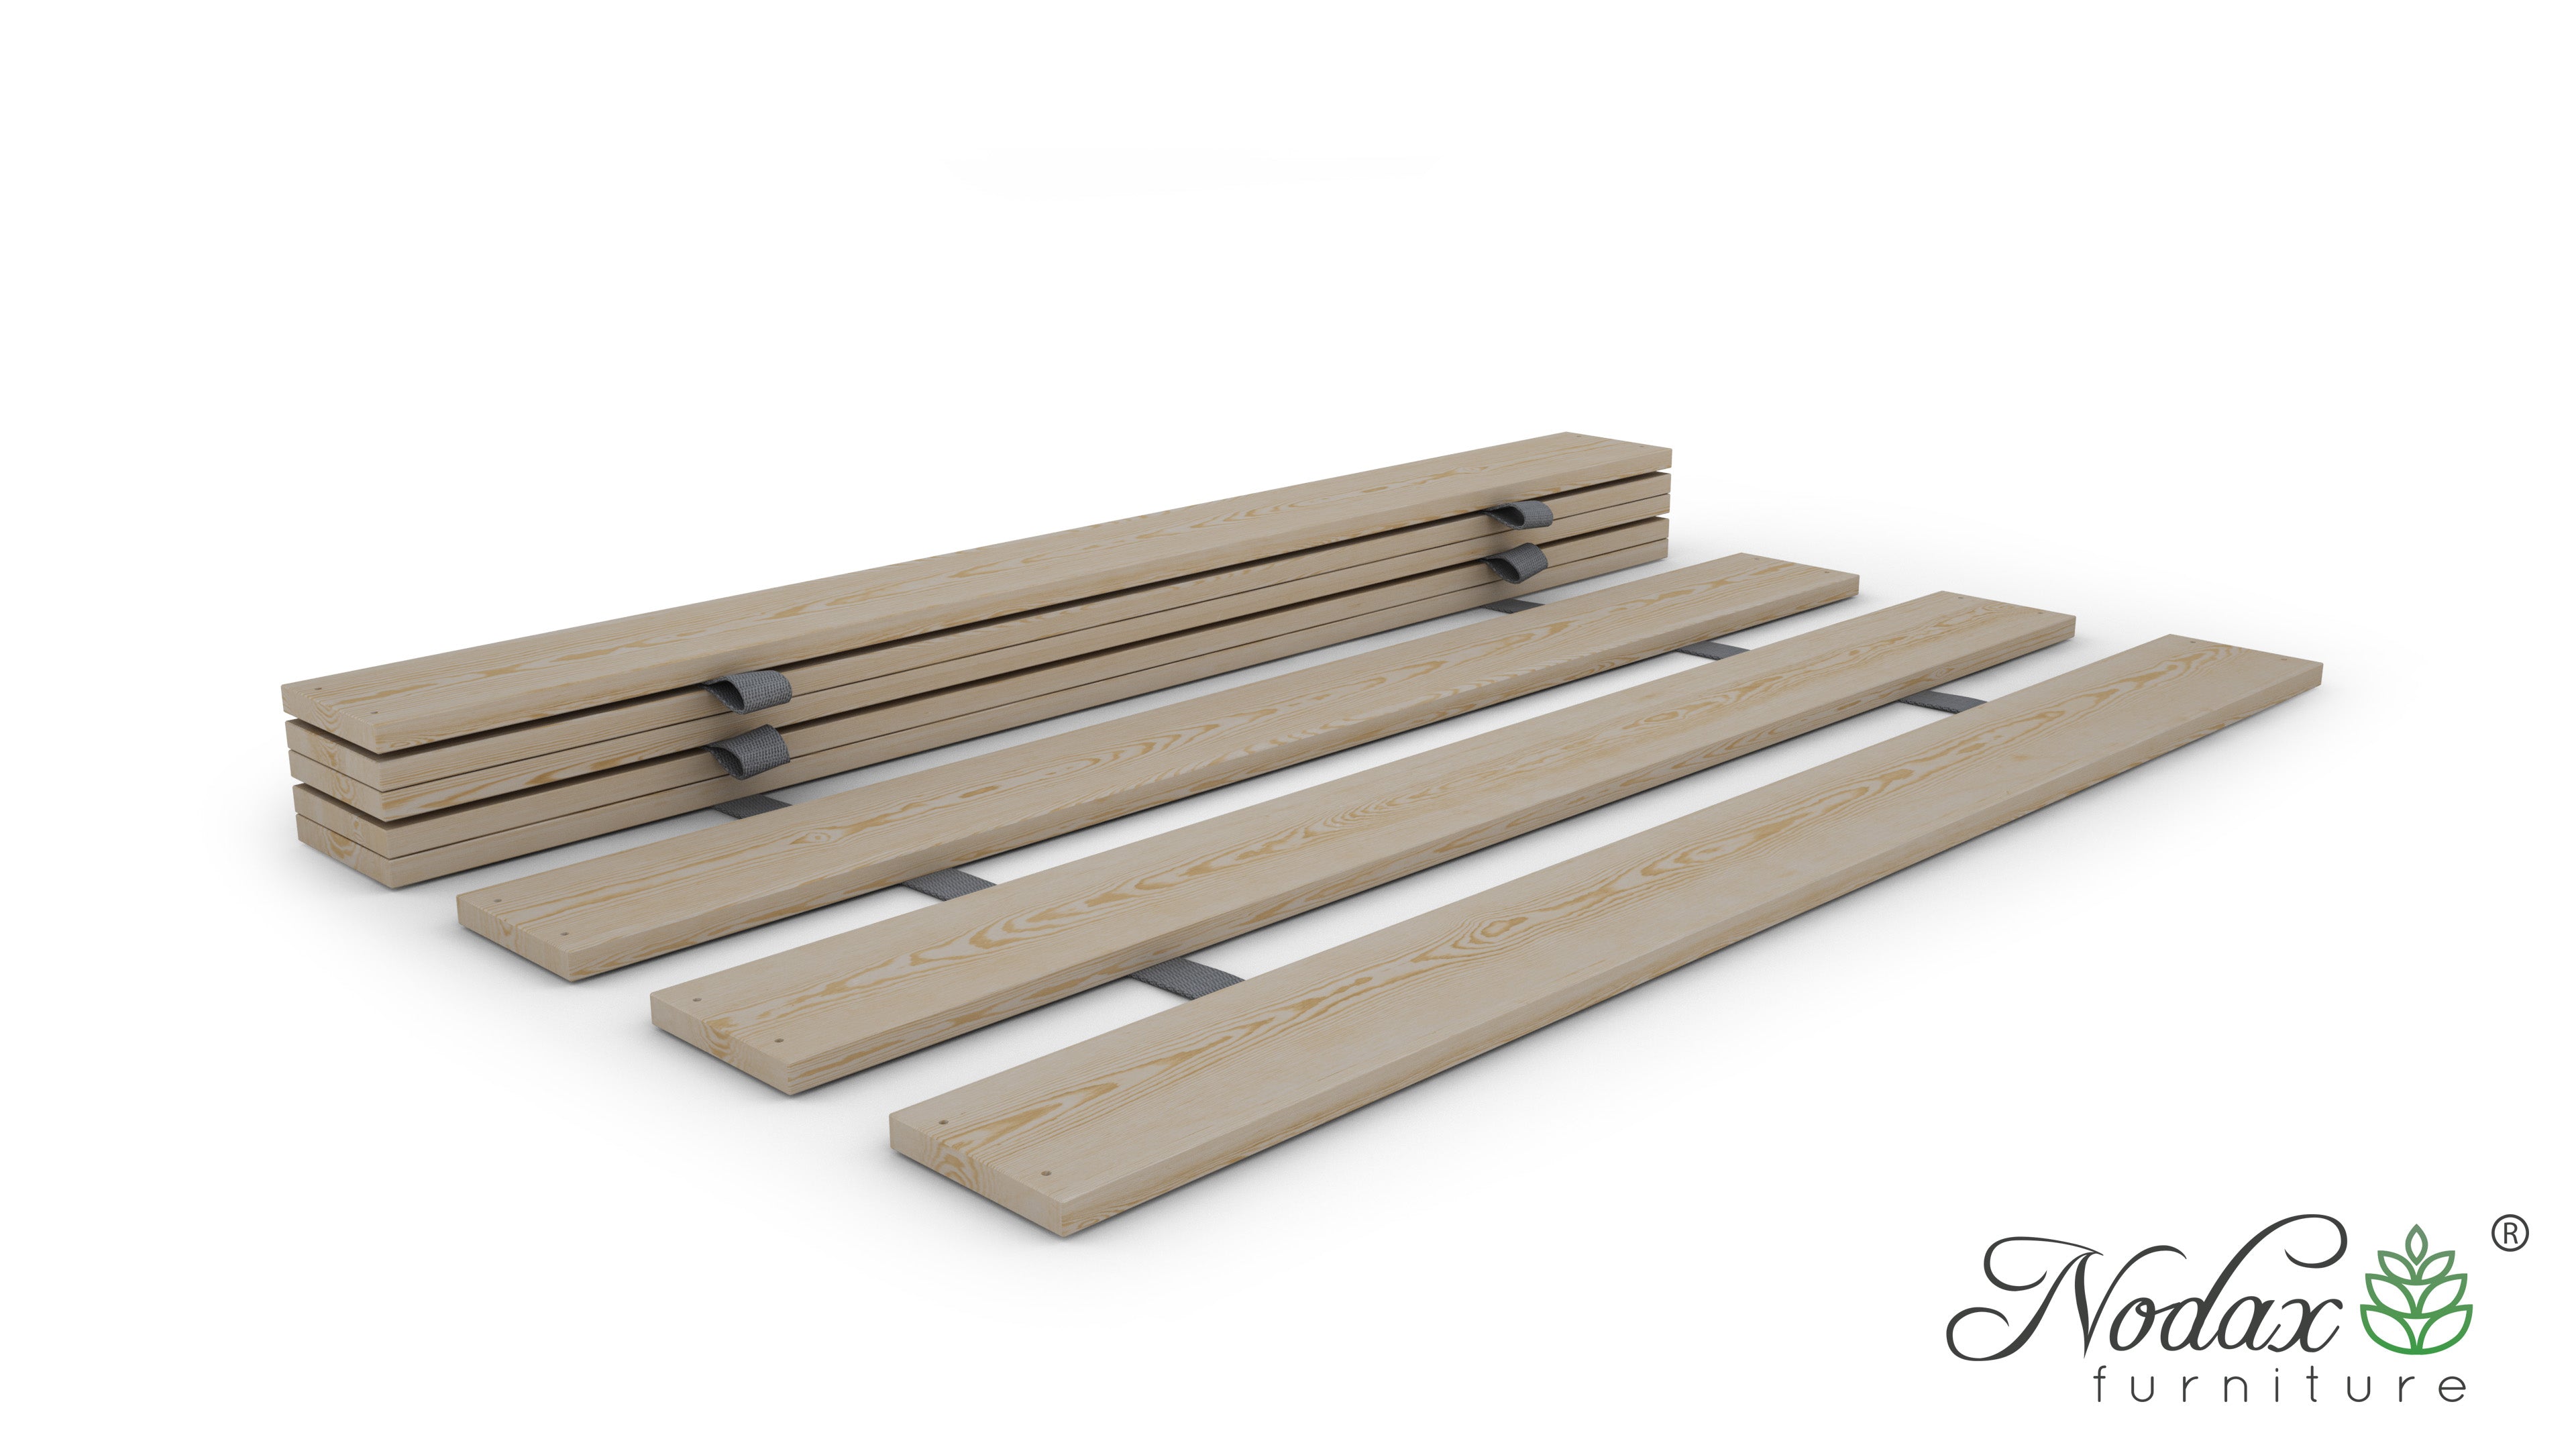 Wooden-slats-Nodax-solid-furniture-bed